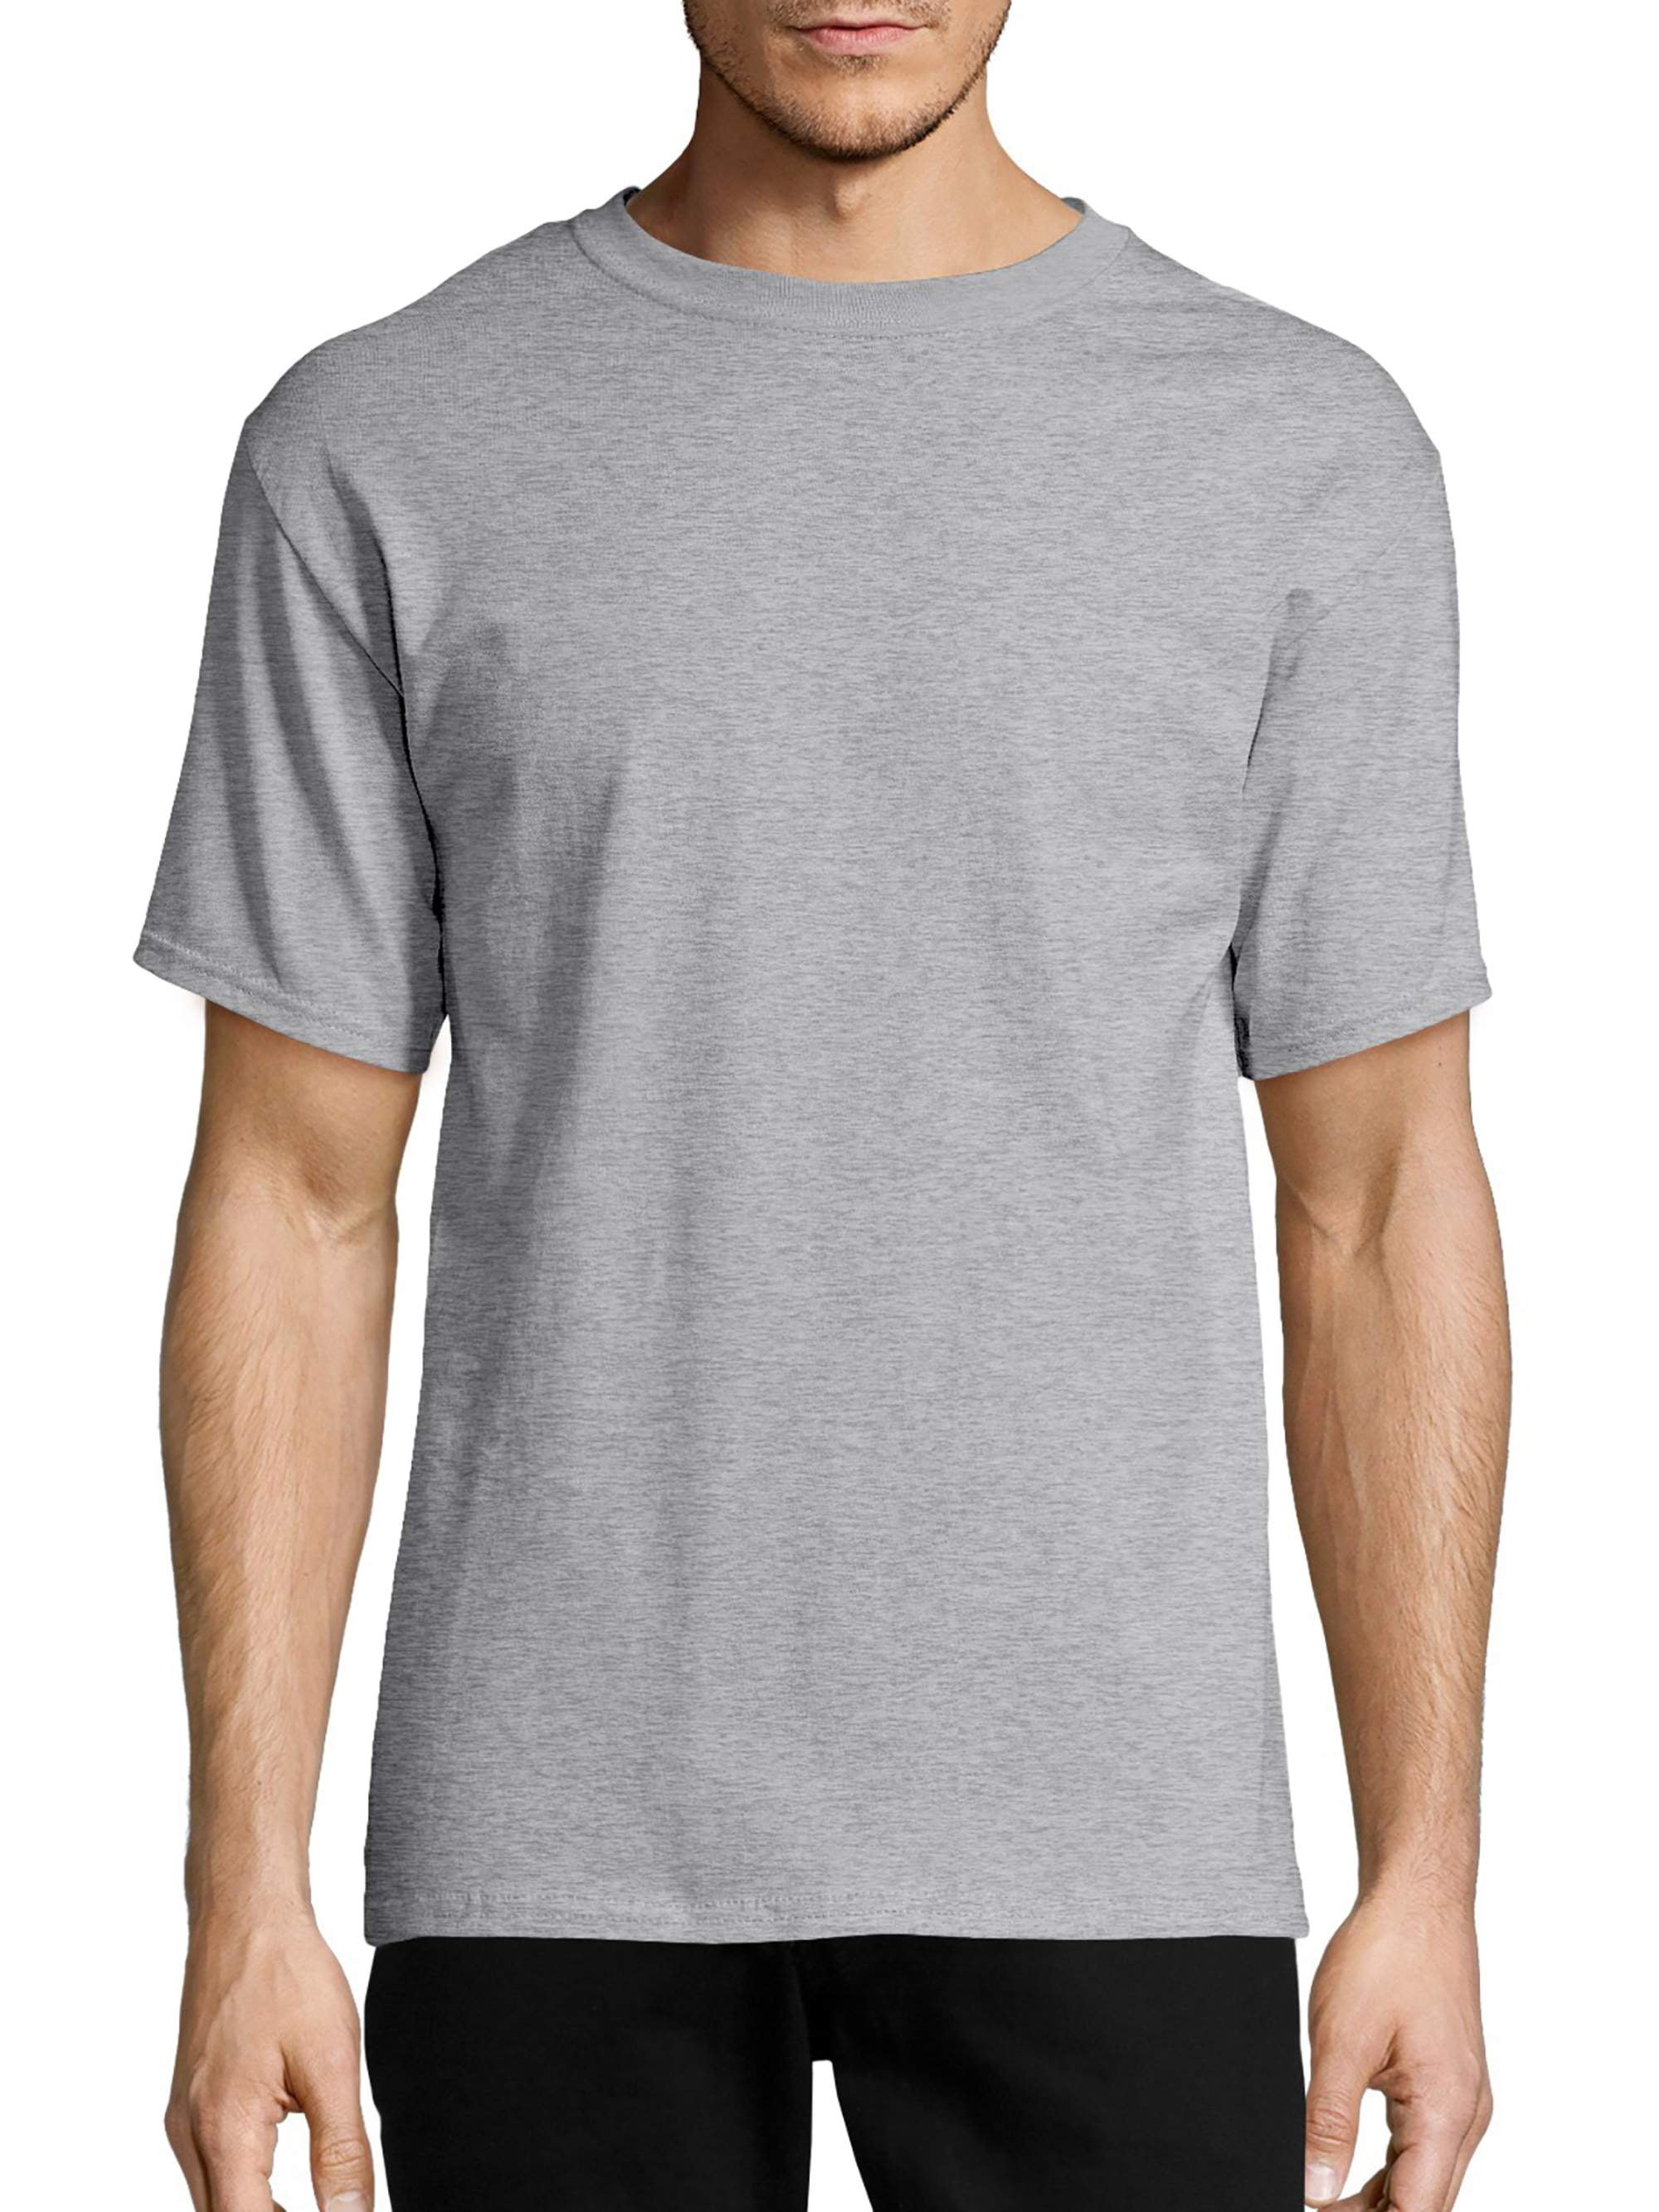 Hanes Men's Long-Sleeve Henley Shirt Beefy-T pure cotton 3 button S-3XL  Tagless